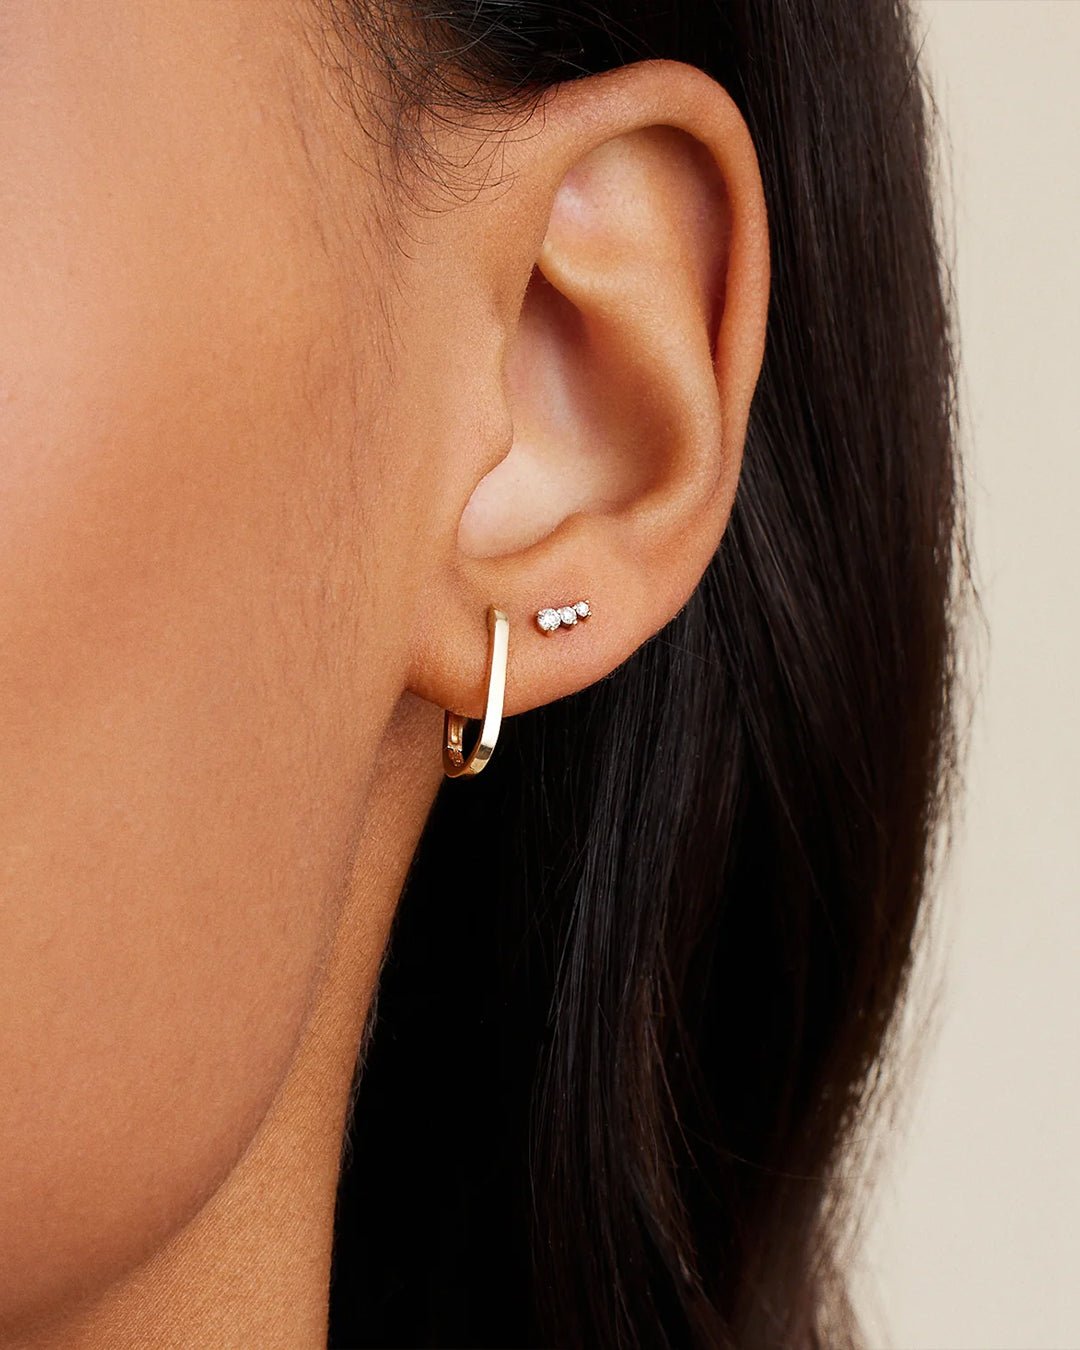 Diamond Cluster StudsDiamond trio studsDiamond earrings || option::14k Solid Gold